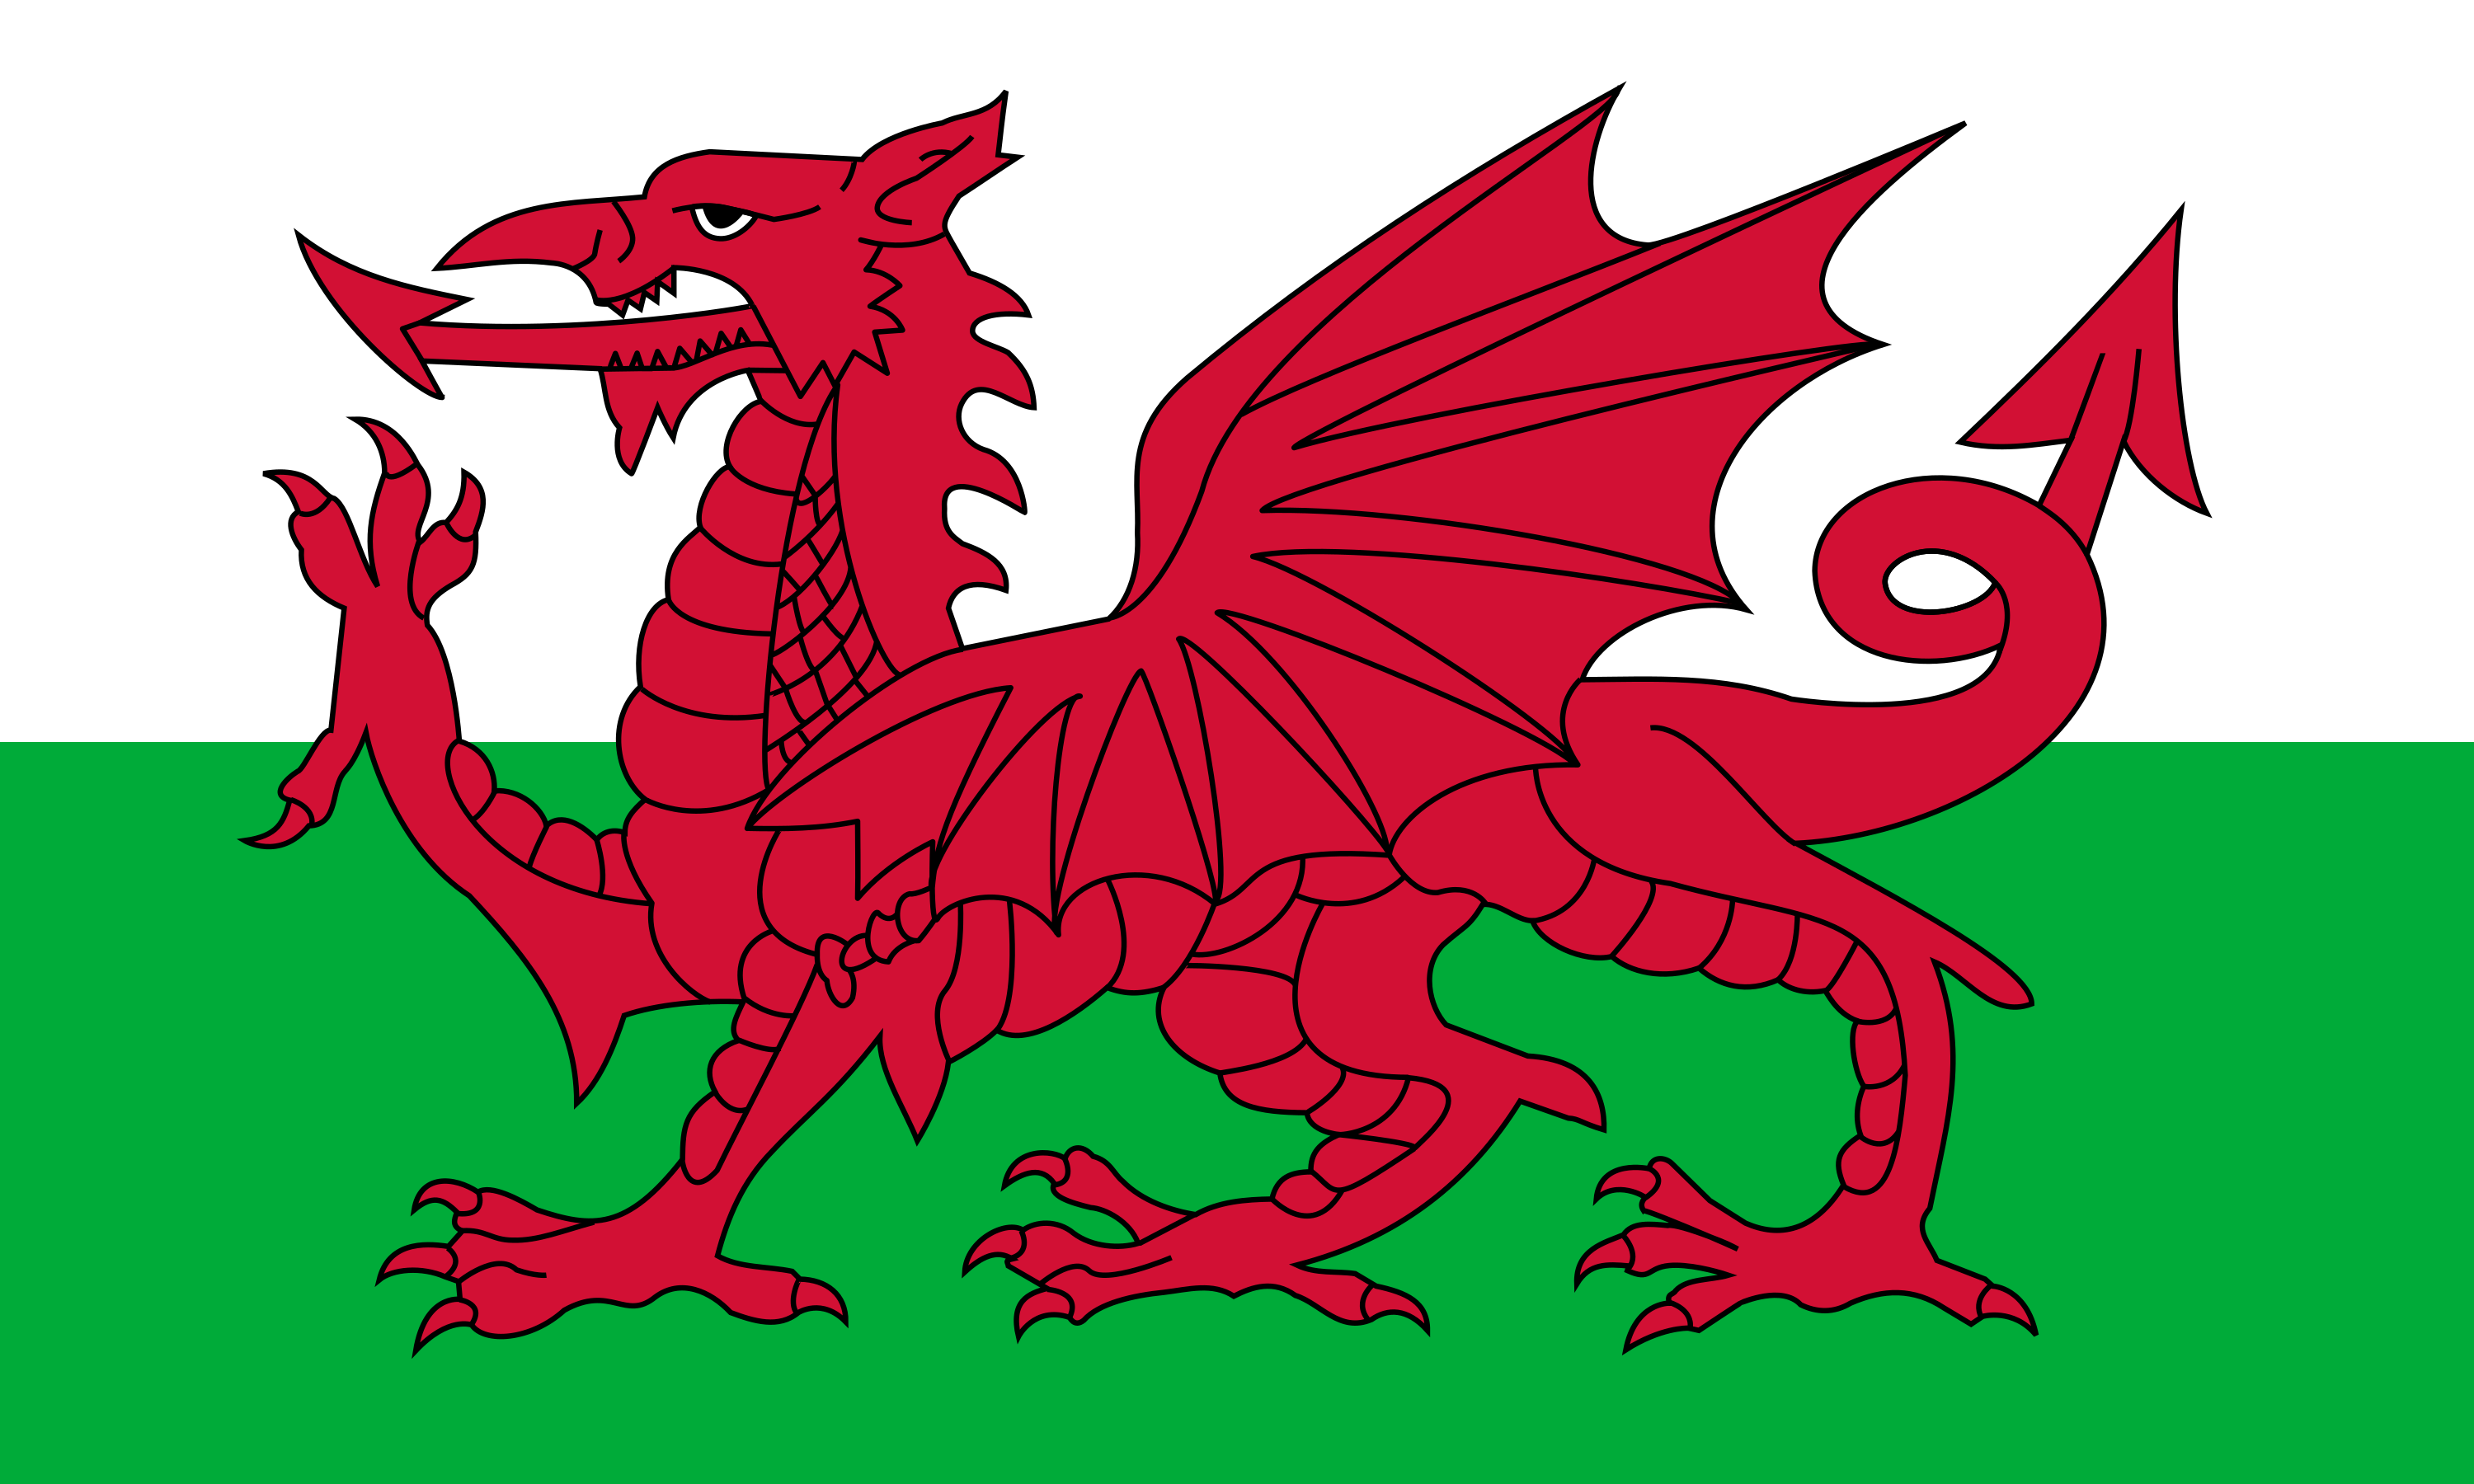 Welsh Flag Dragon Wales Unisex Novelty Ankle Socks Adult Size 6-11 